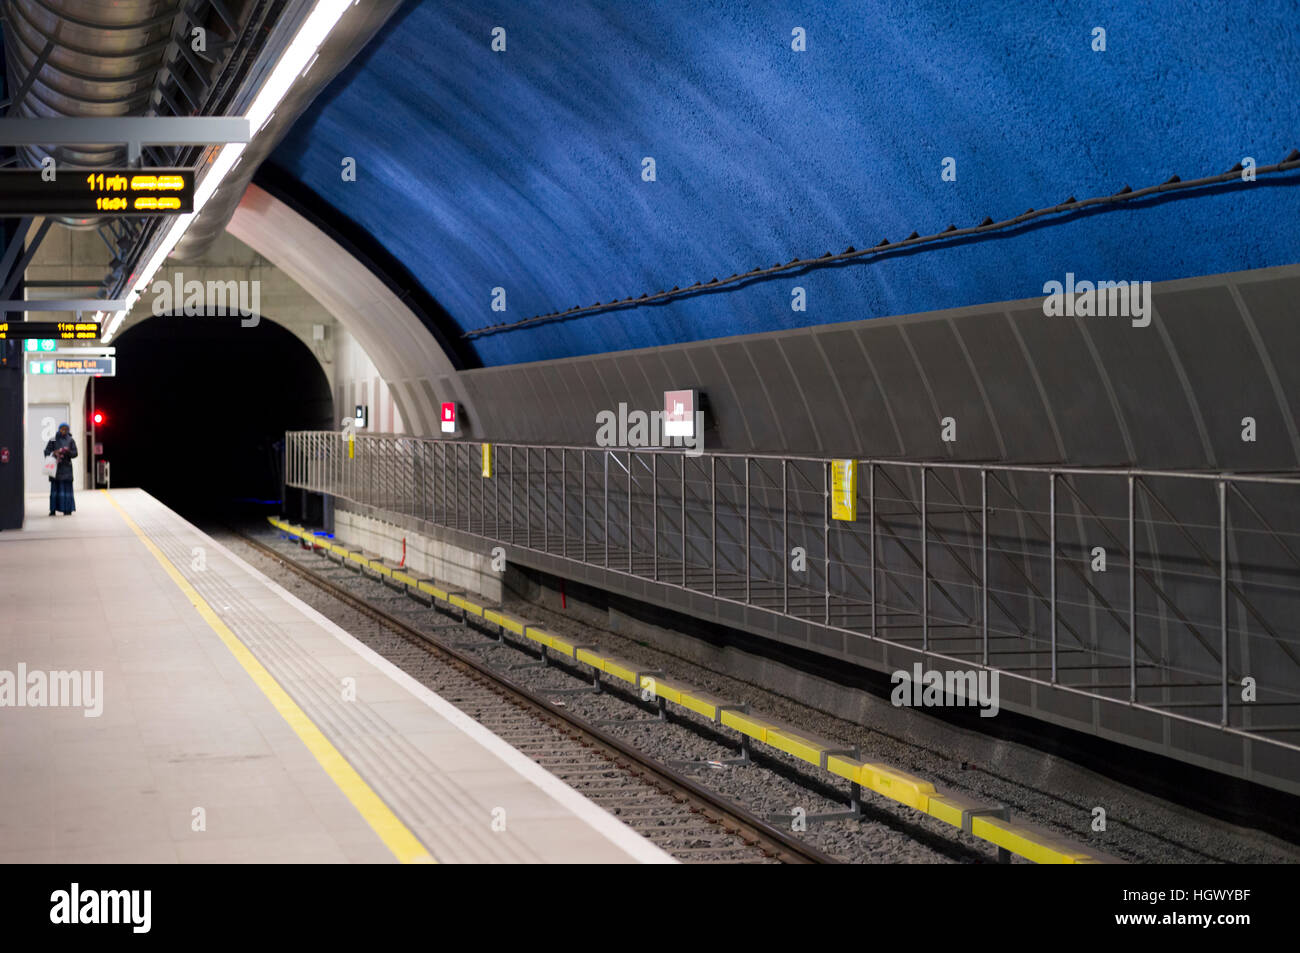 The Loren subway station in Oslo. Stock Photo